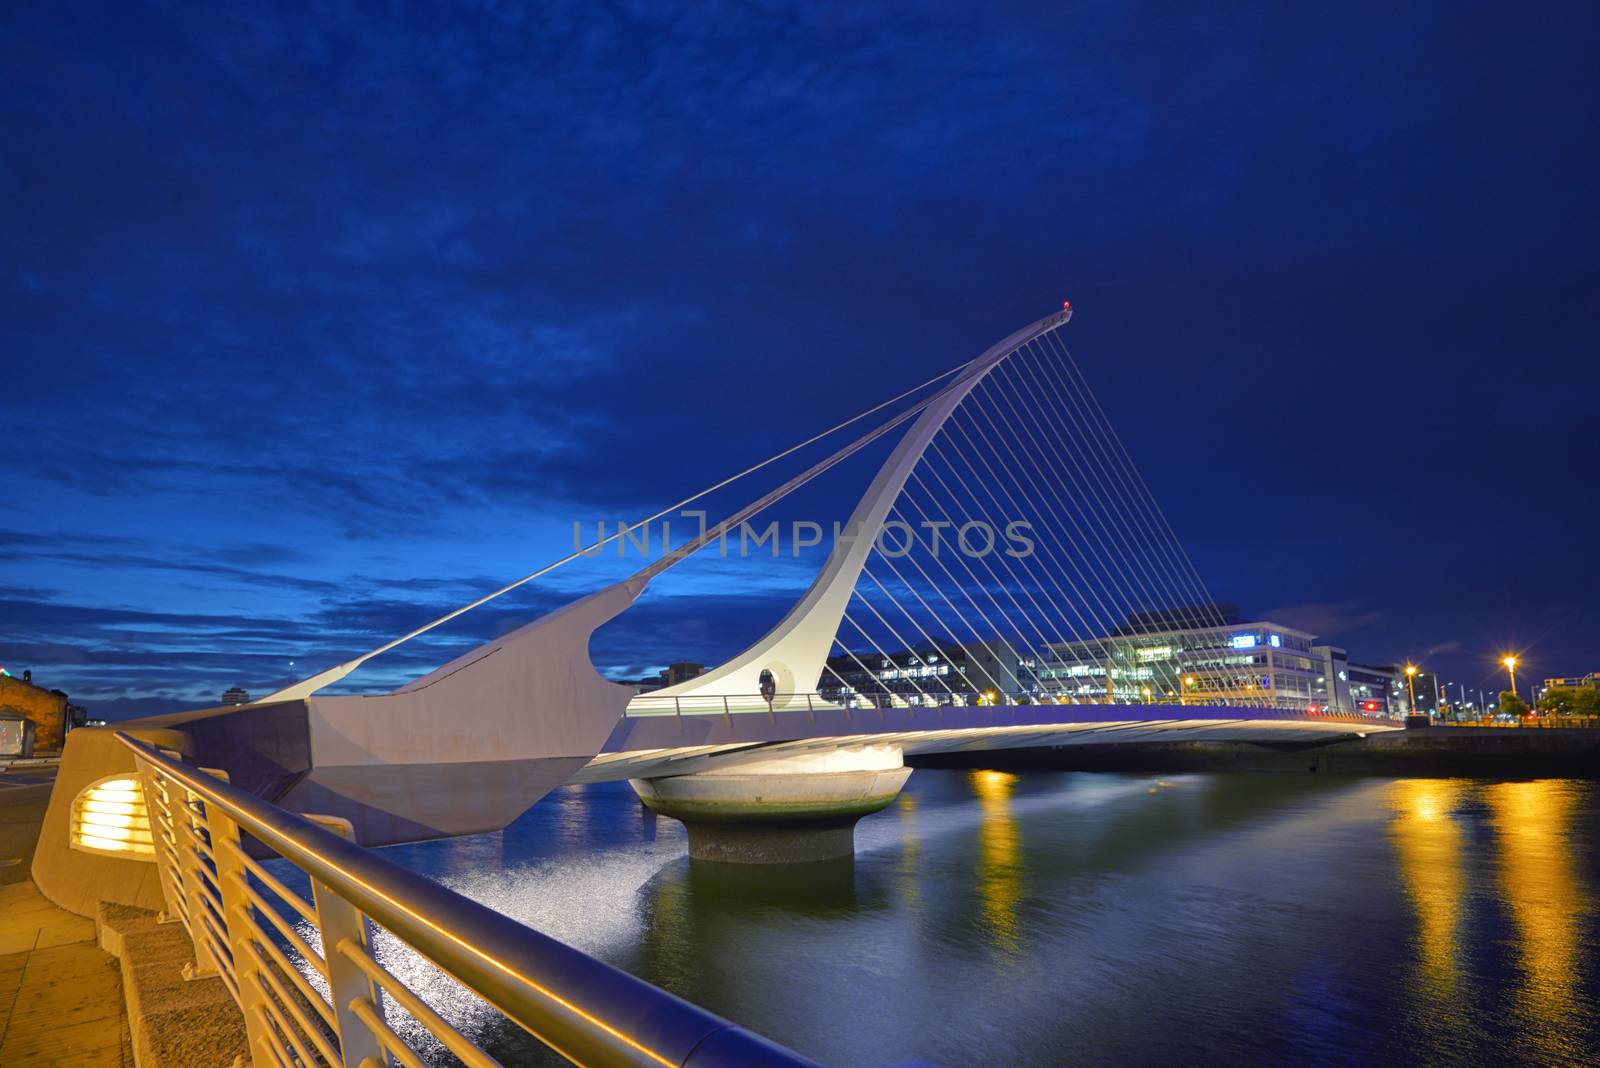 The Samuel Beckett Bridge by mady70